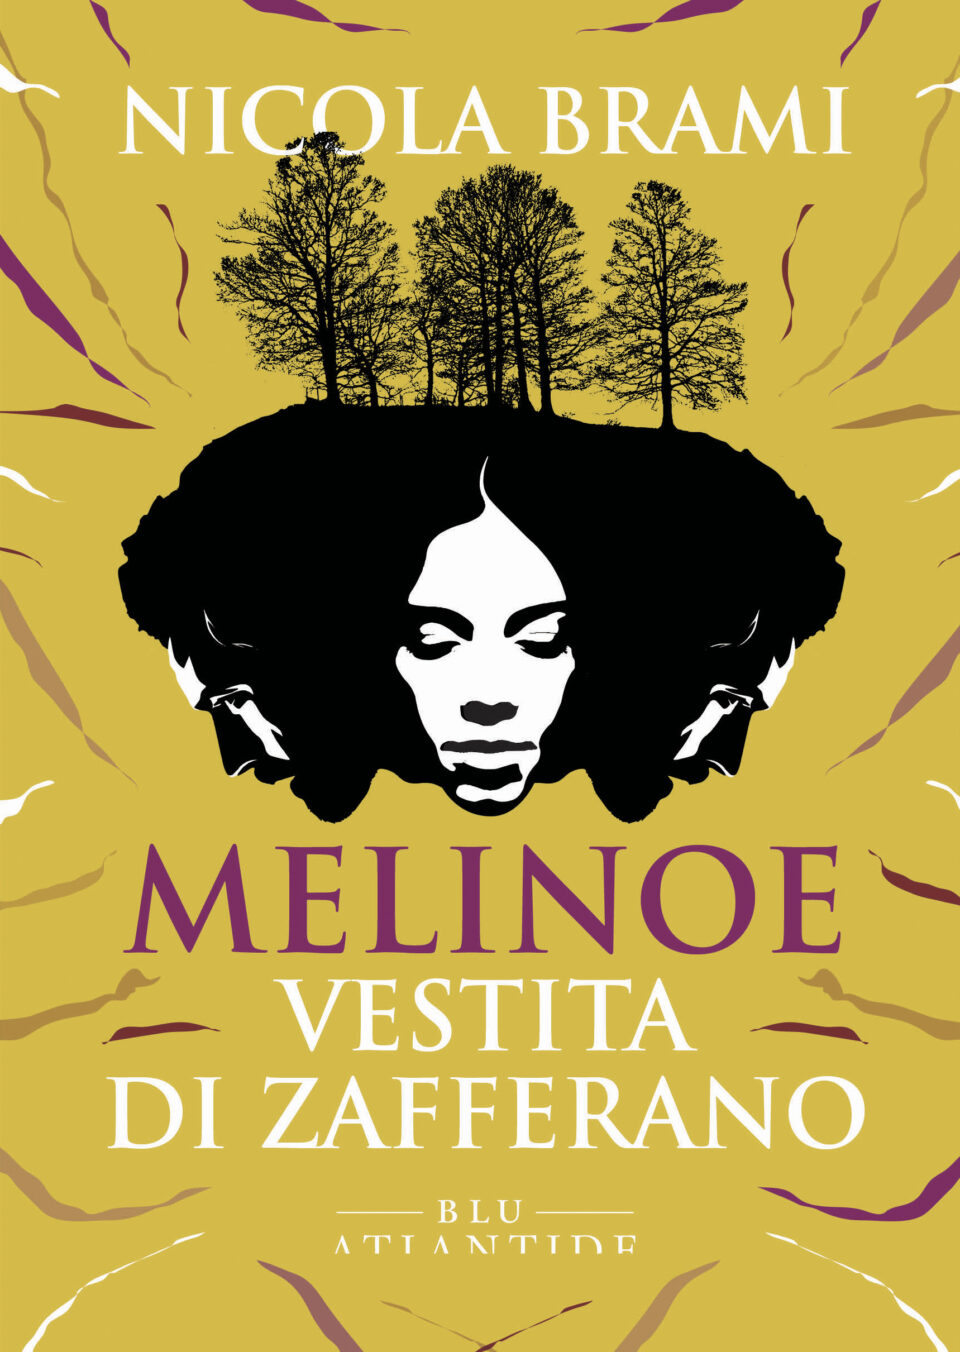 Nicola Brami: Melinoe vestita di zafferano (Paperback, Italiano language, Atlantide)